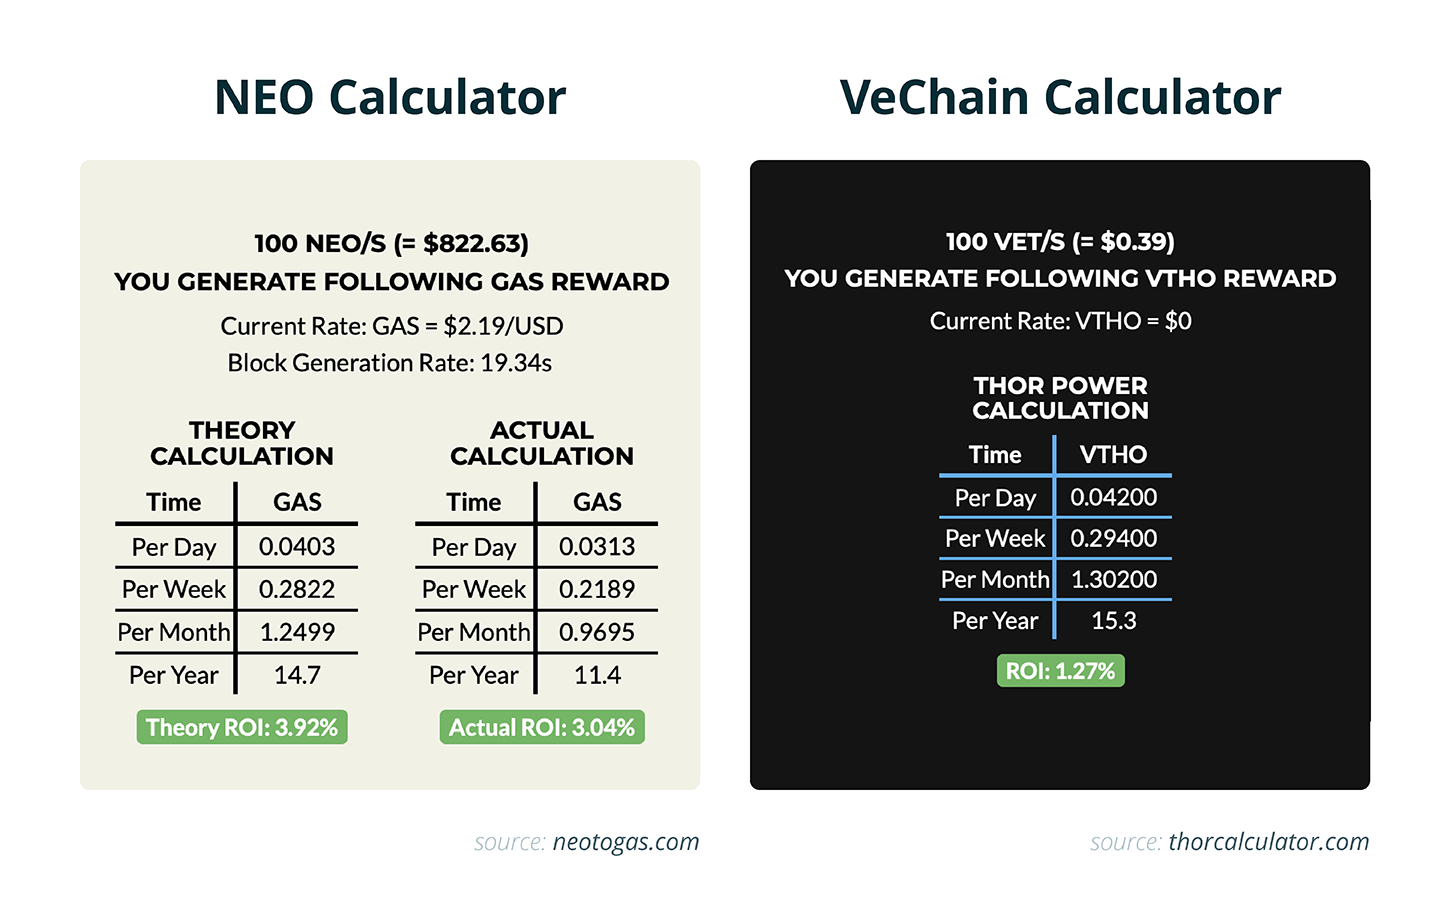 NEO Calculator / VeChain Calculator